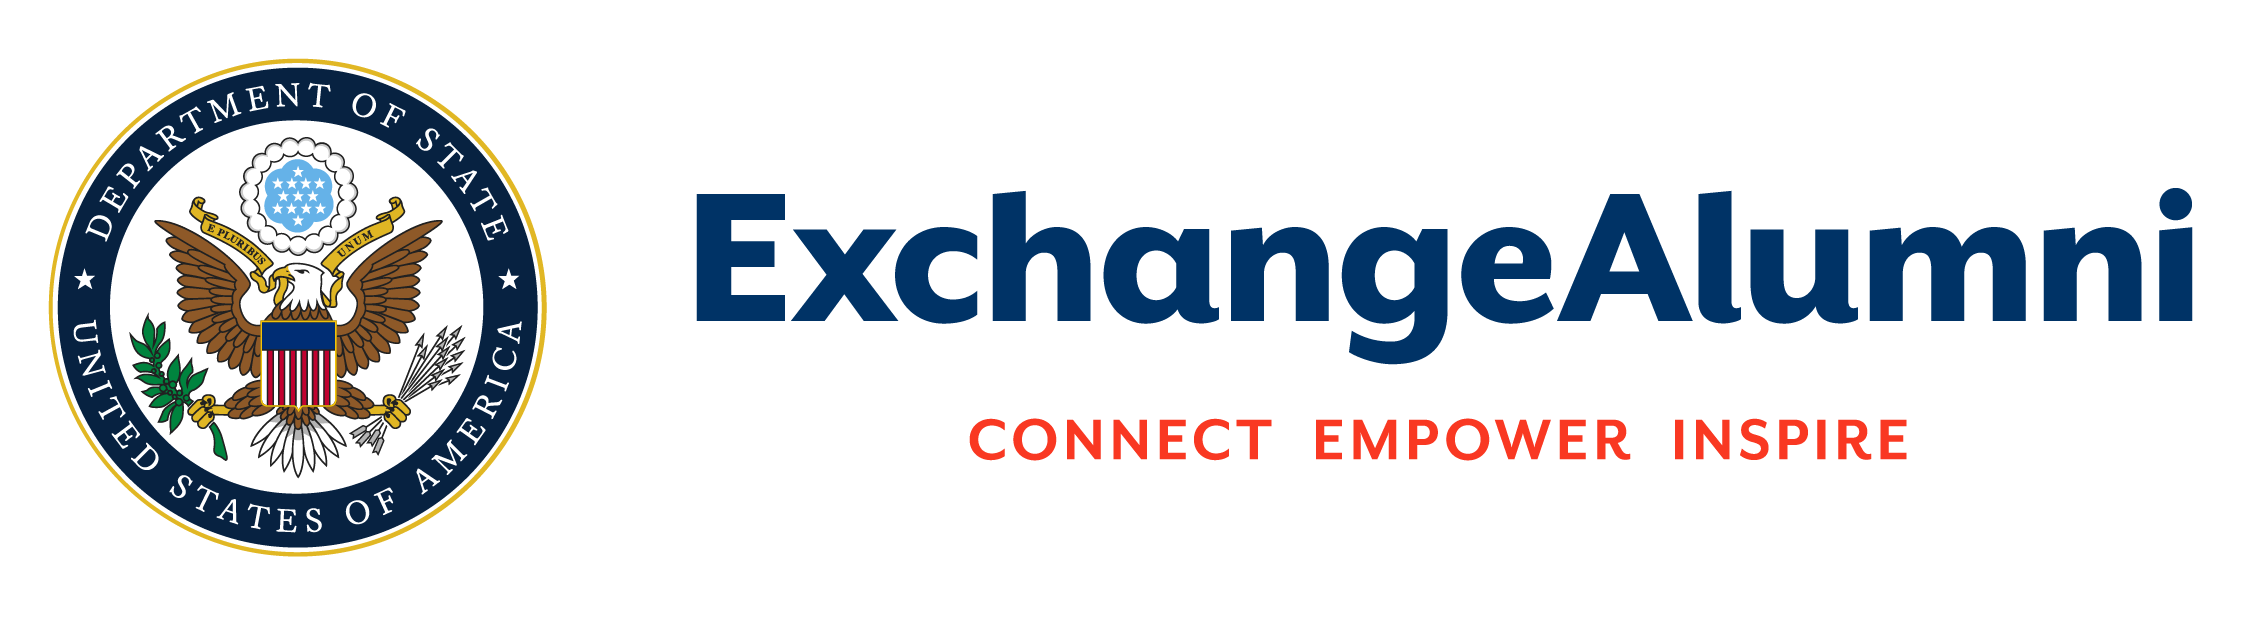 exchange_alumni_logo.png